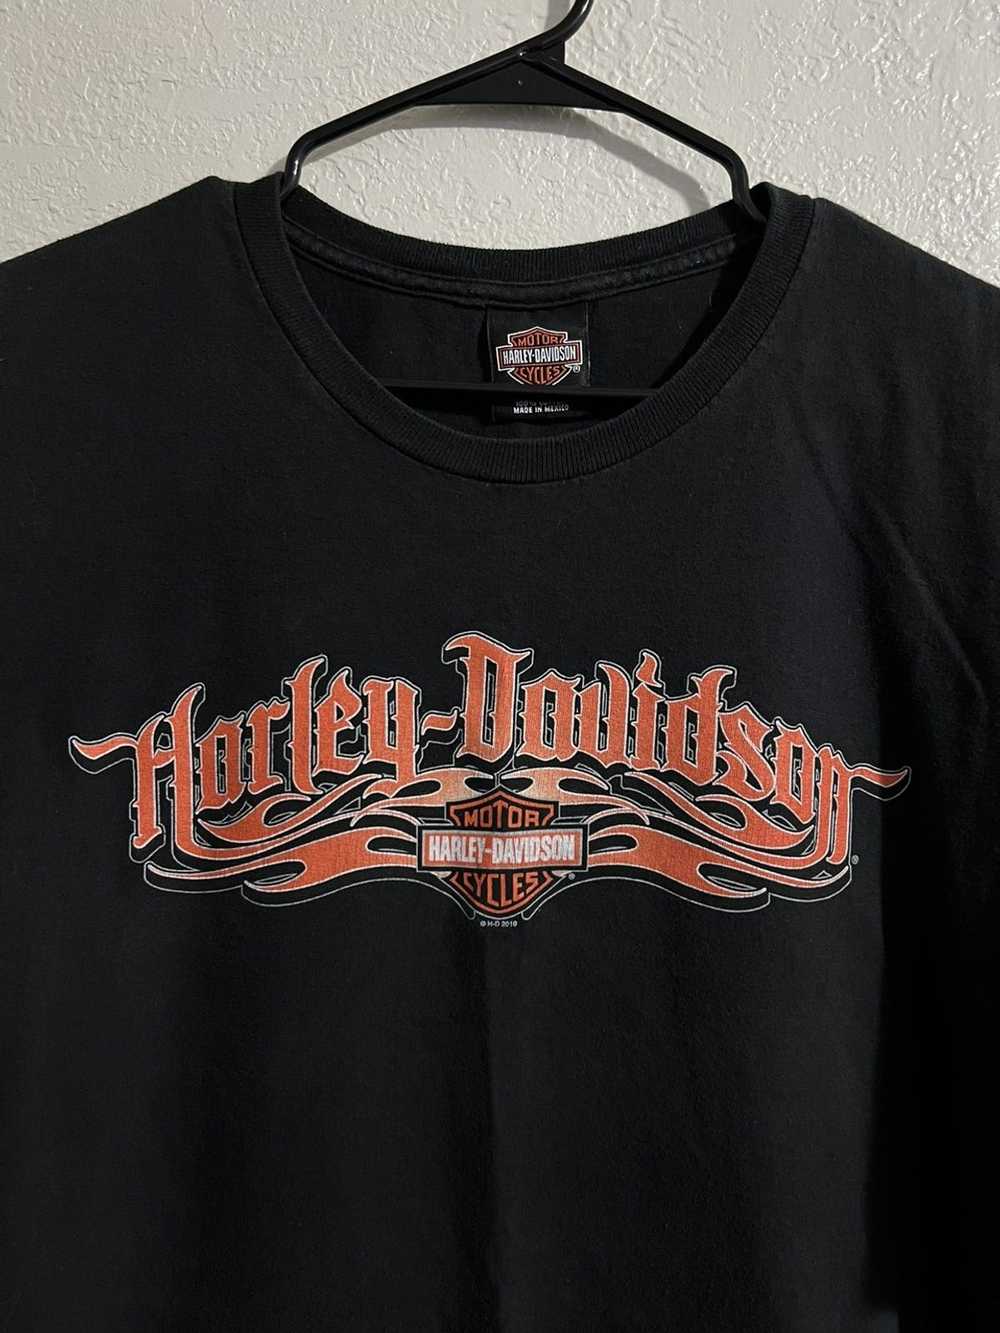 Harley Davidson Harley Davidson Tee - image 2